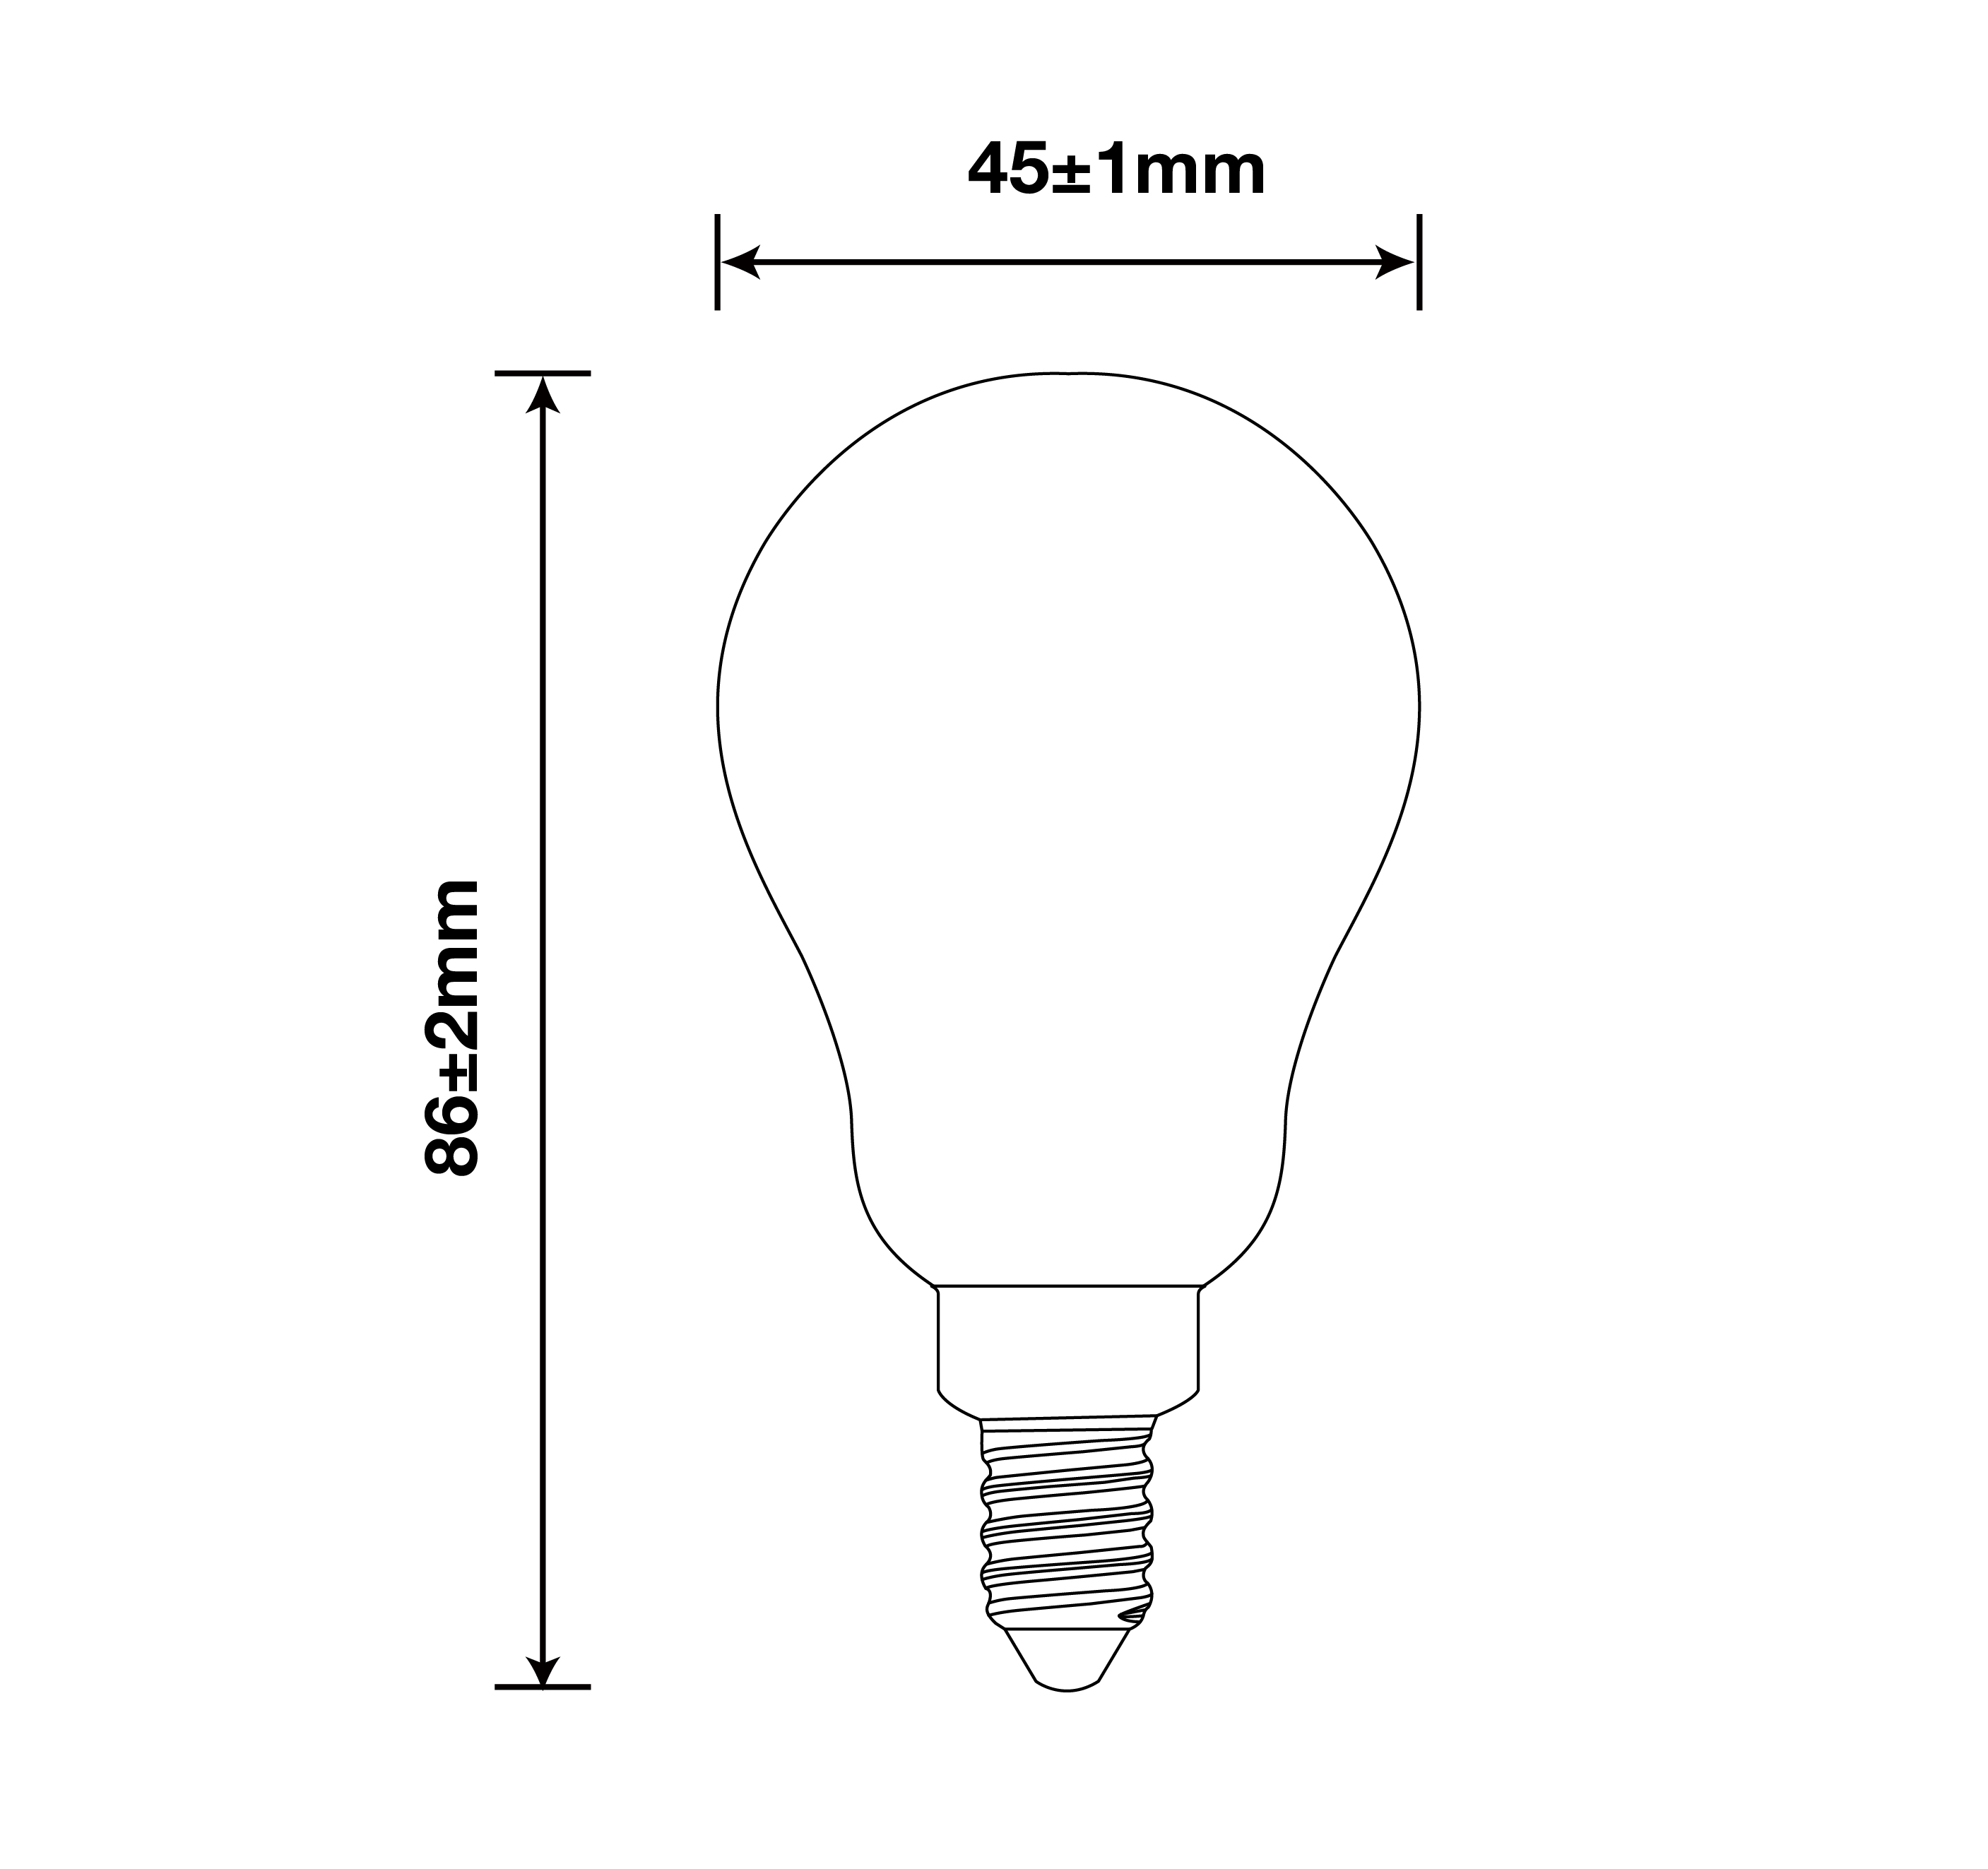 2W A15 Filament Bulbs/25Watts Edison A15 Bulbs